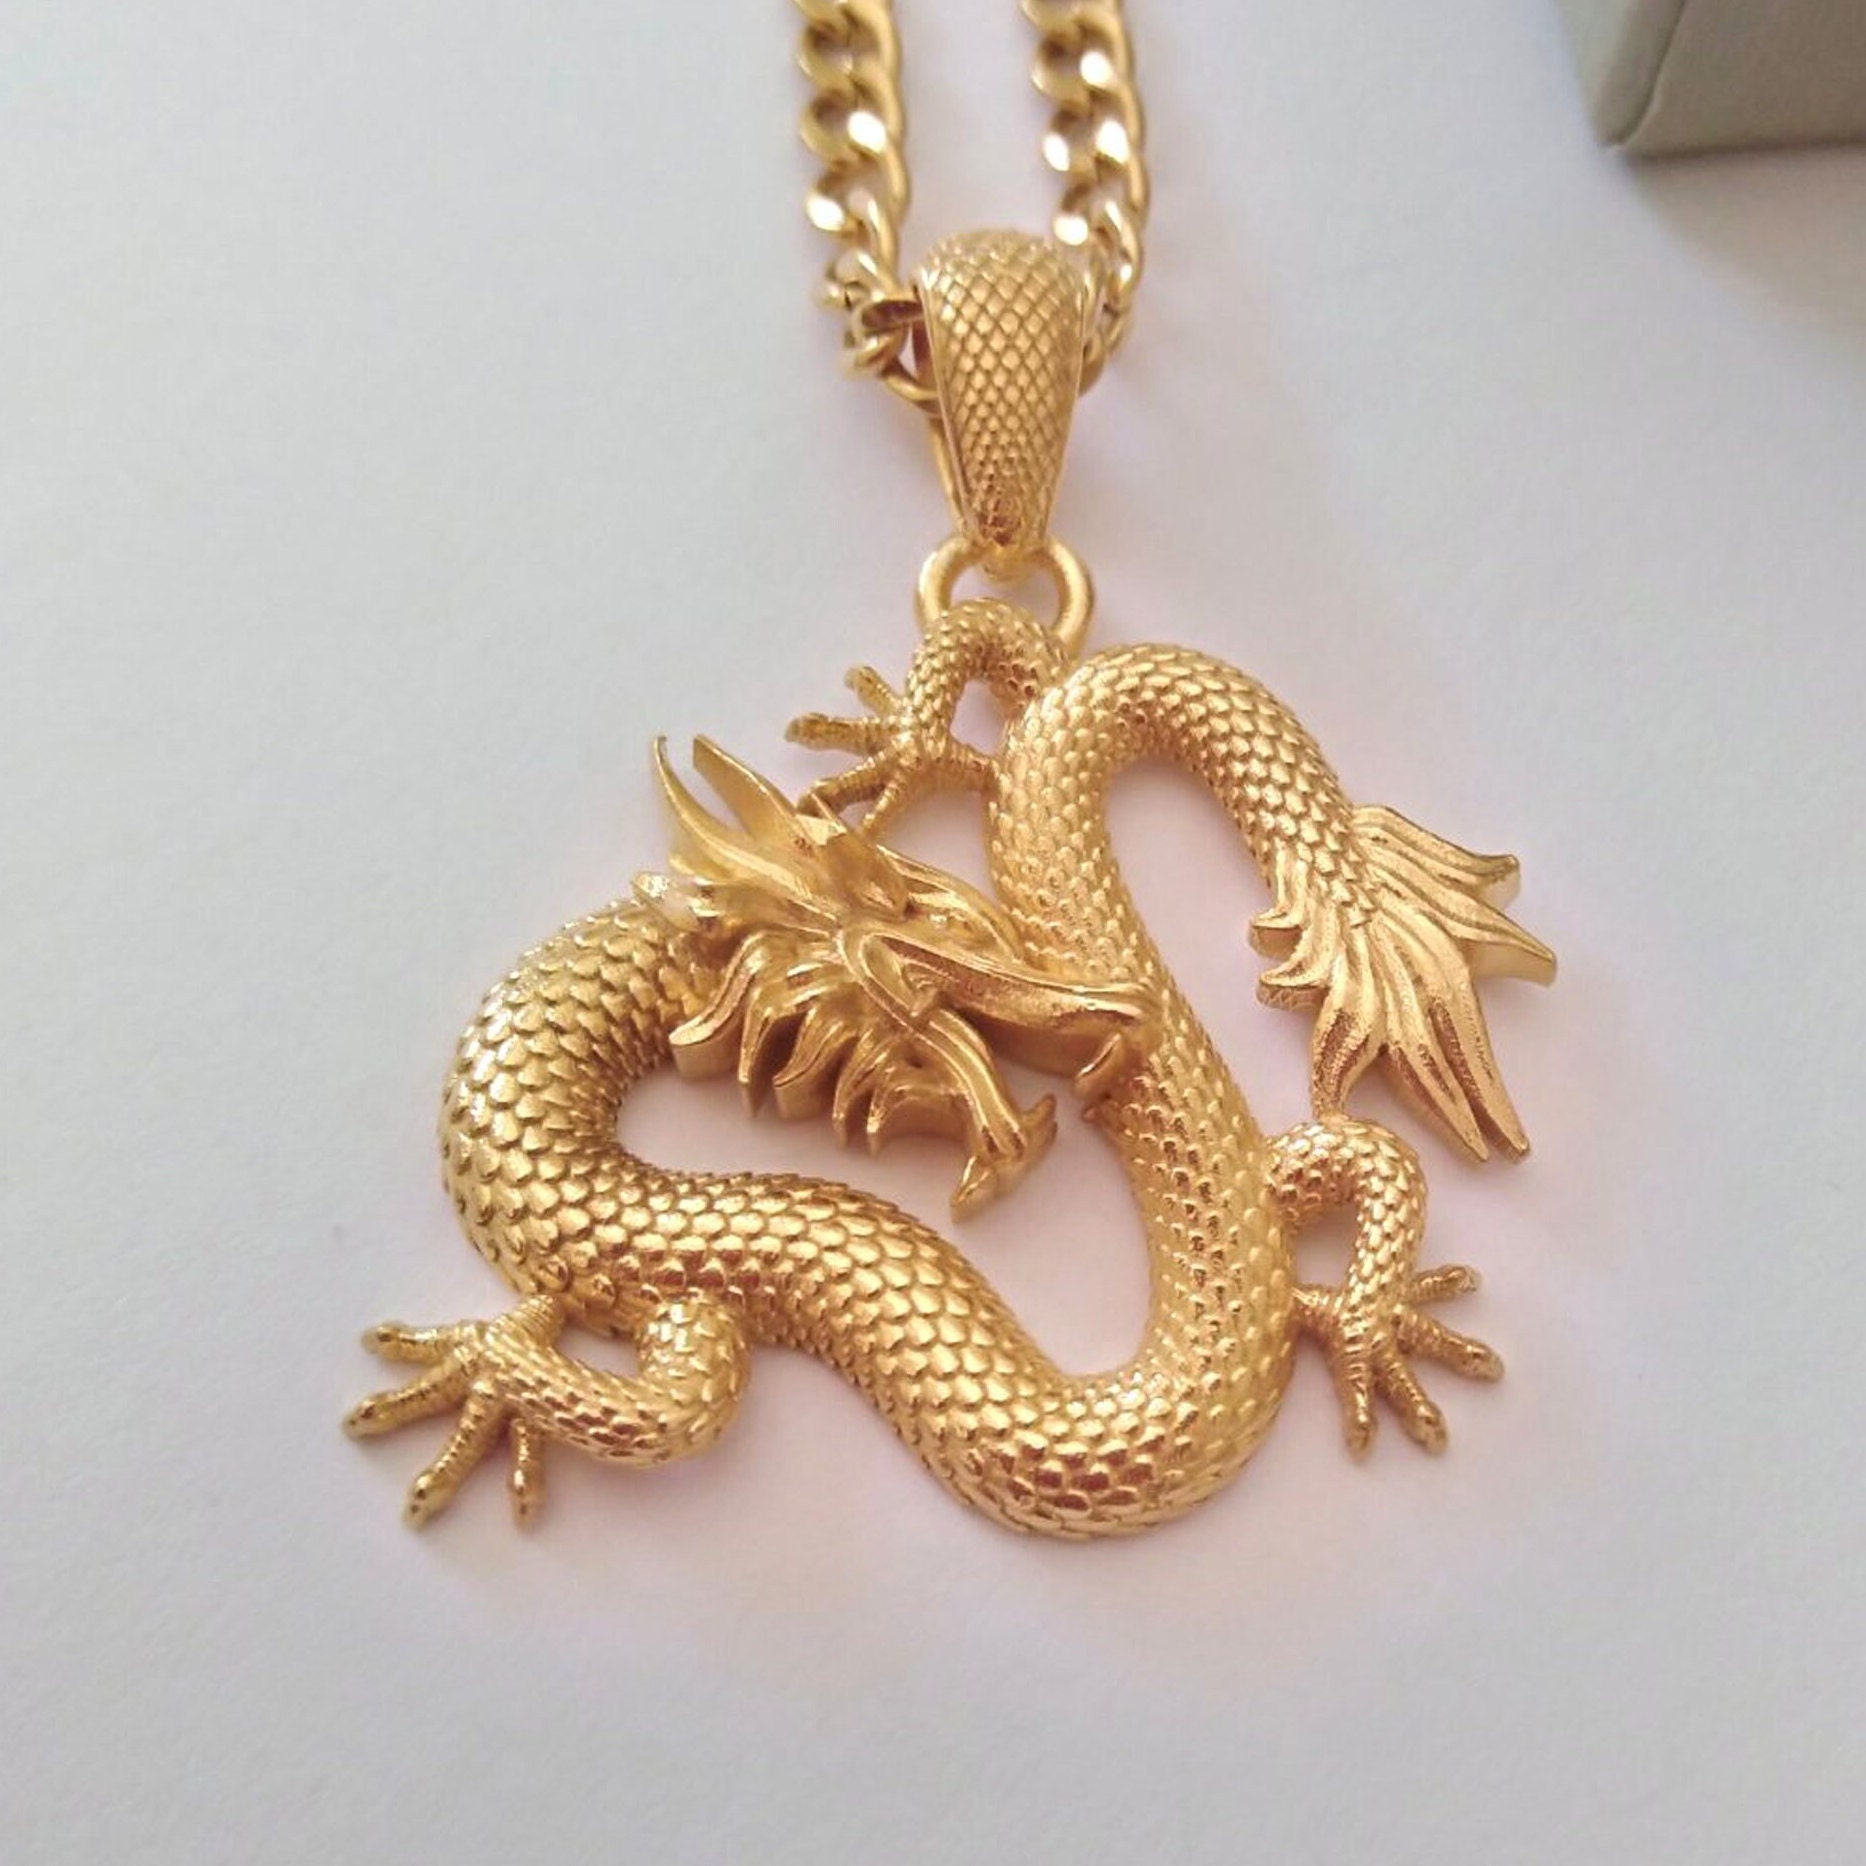 Big Chinese Dragon Charm Pendant (1 piece / 46mm x 37mm / Antique Bron, MiniatureSweet, Kawaii Resin Crafts, Decoden Cabochons Supplies